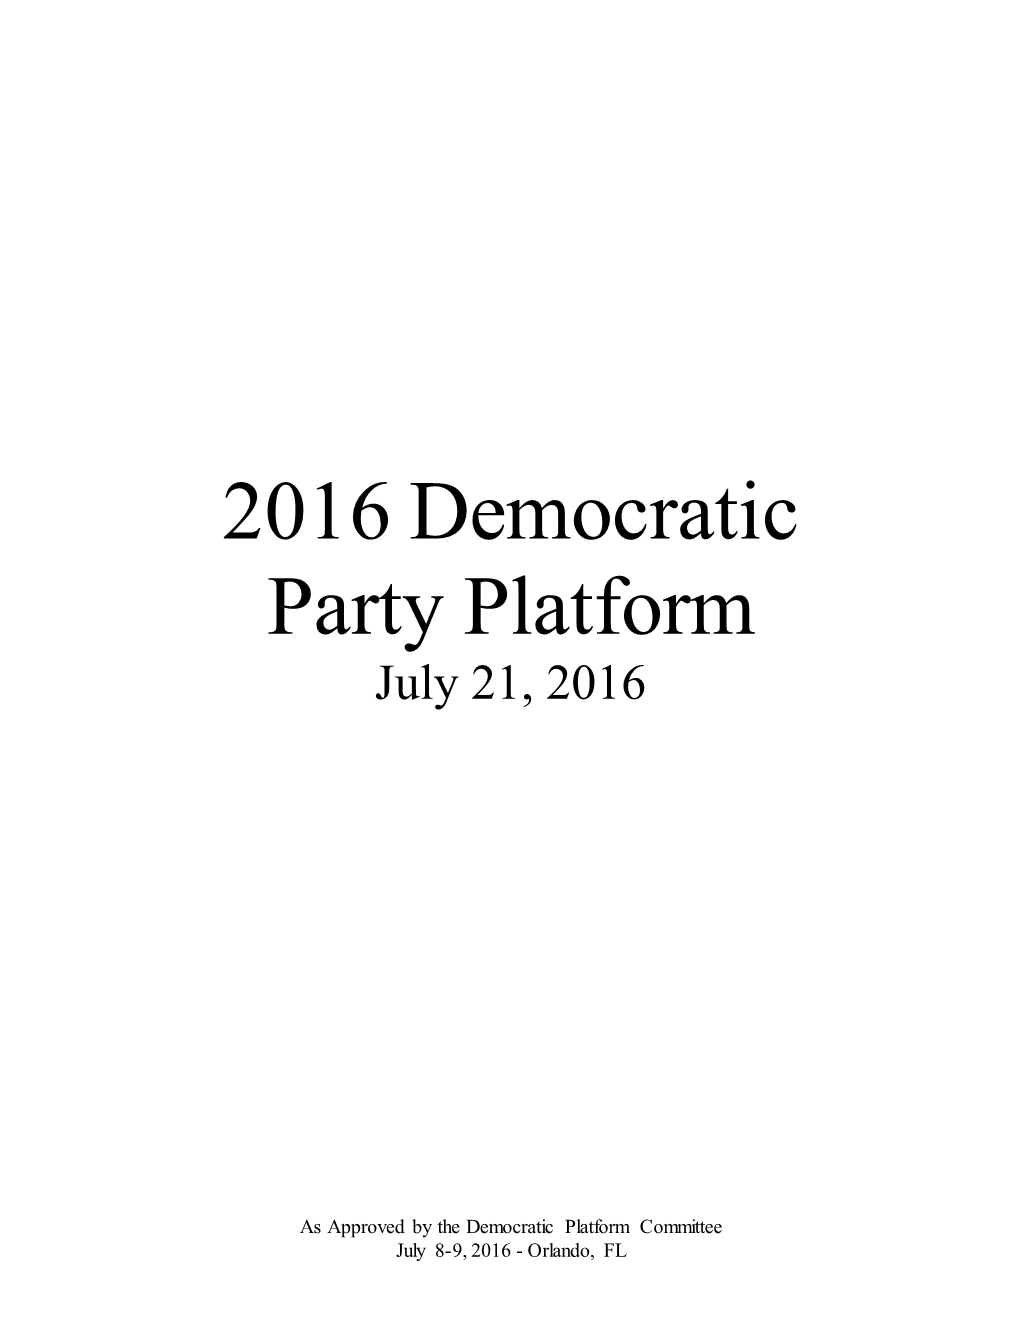 2016 Democratic Party Platform July 21, 2016